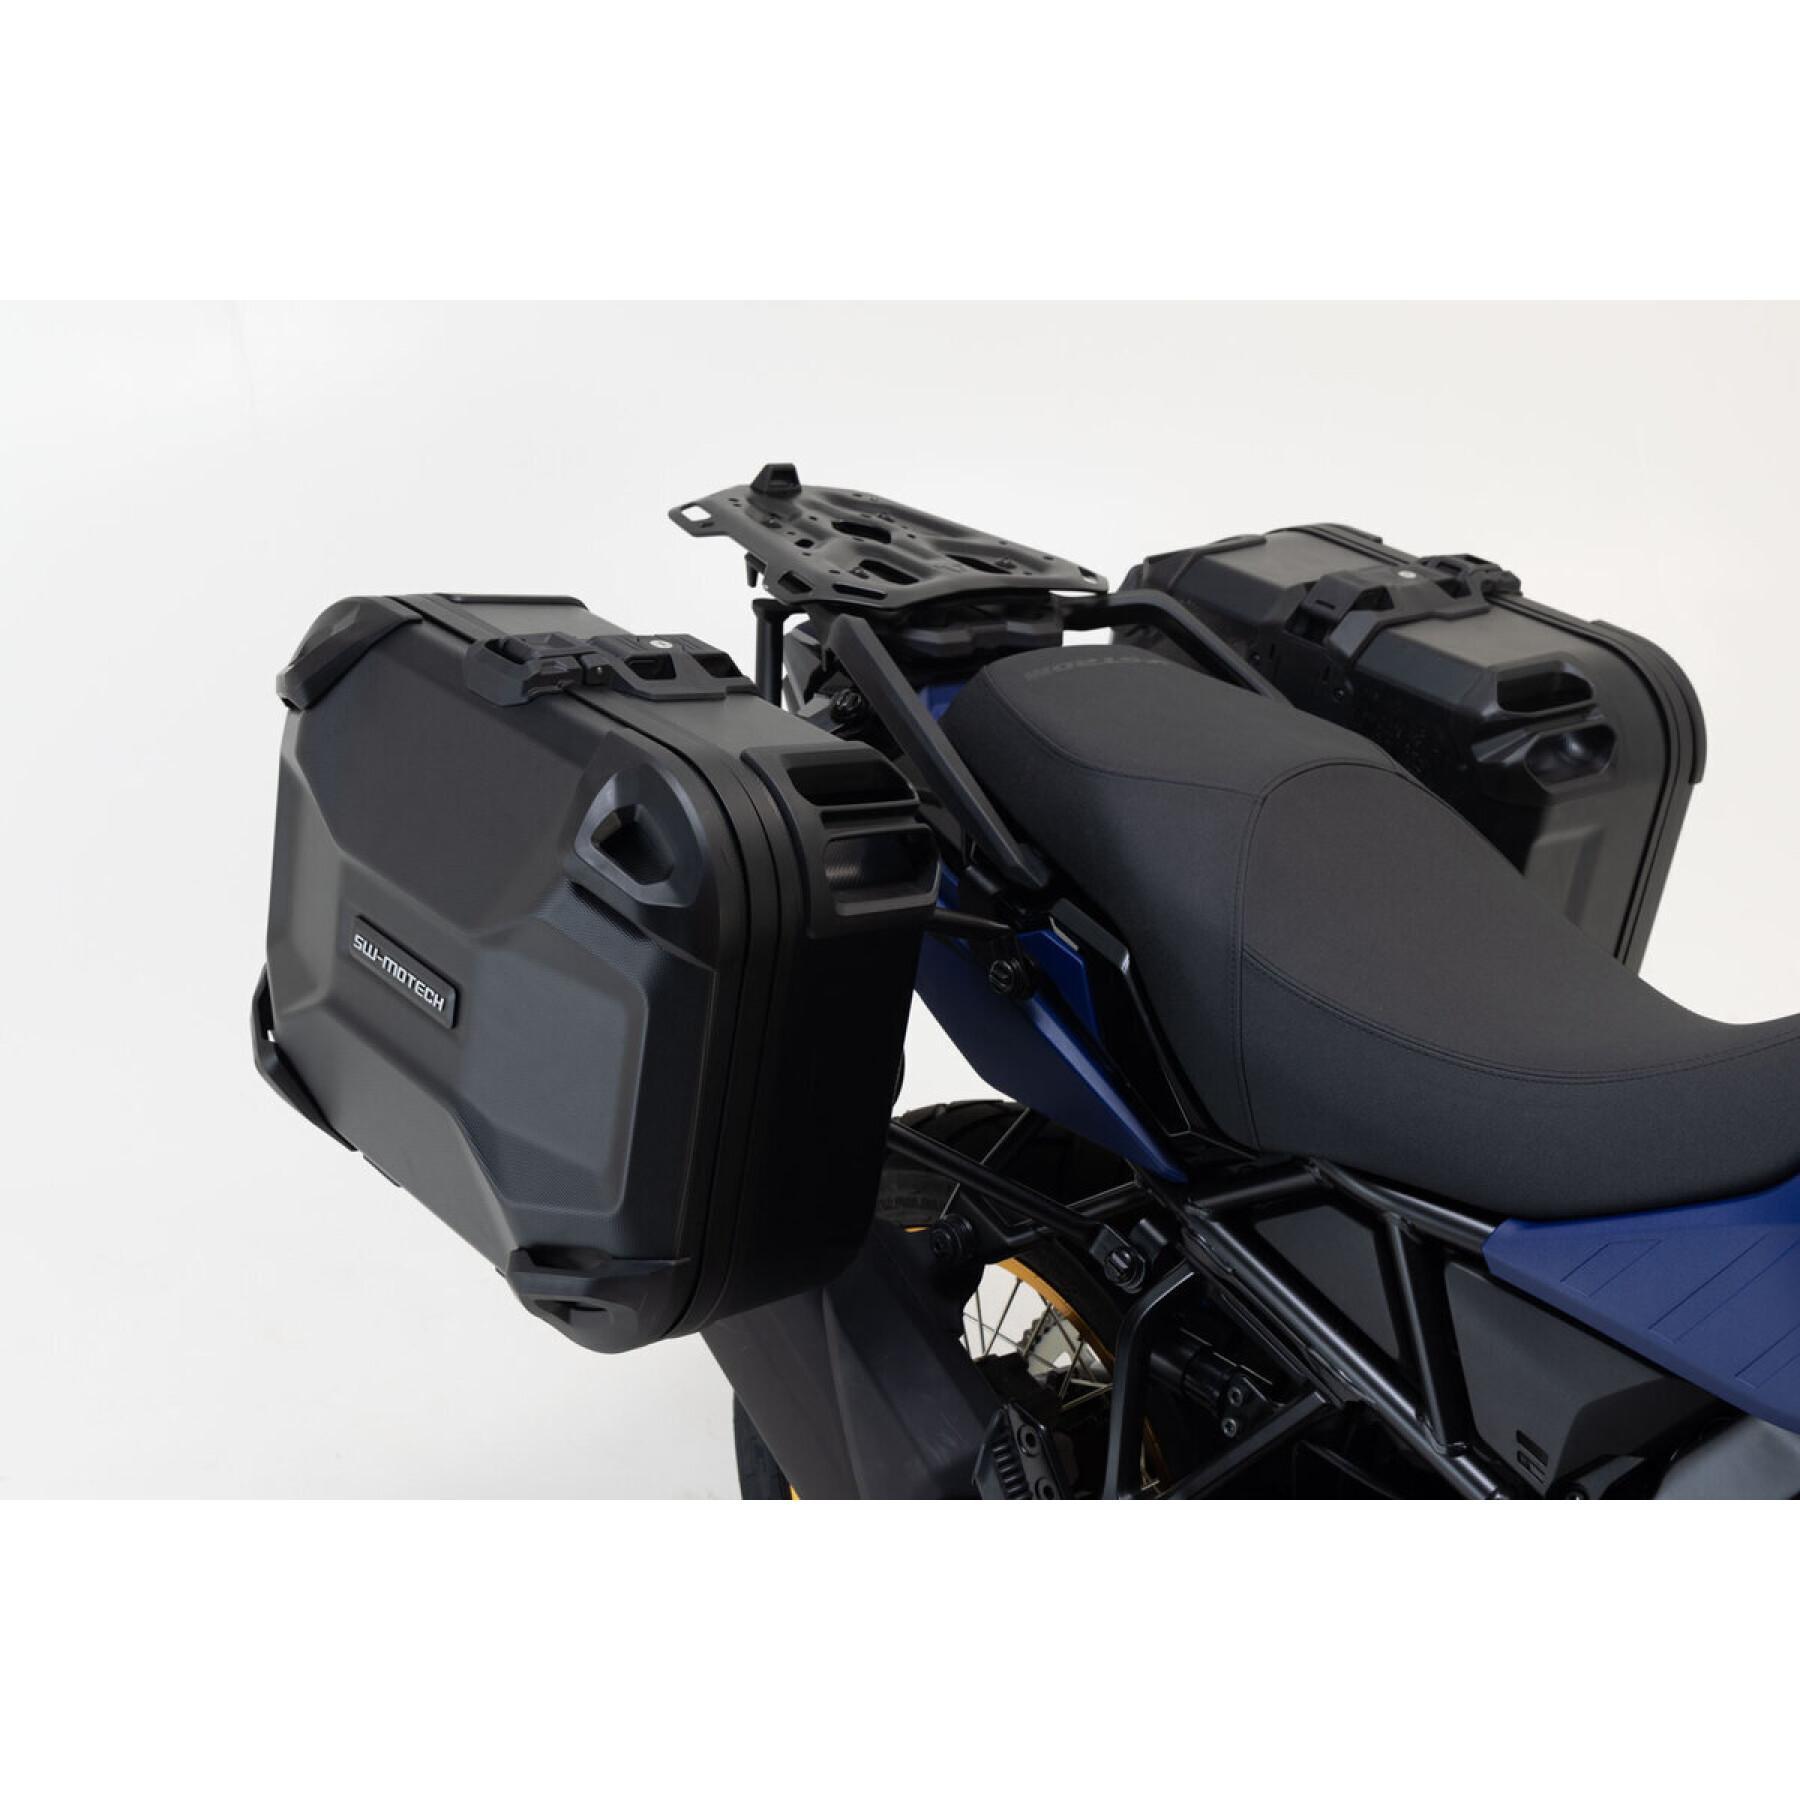 Sistema de maletas laterales rígidas para moto SW-Motech DUSC MT-09 Tracer/900 Tracer (14-18) 66 L